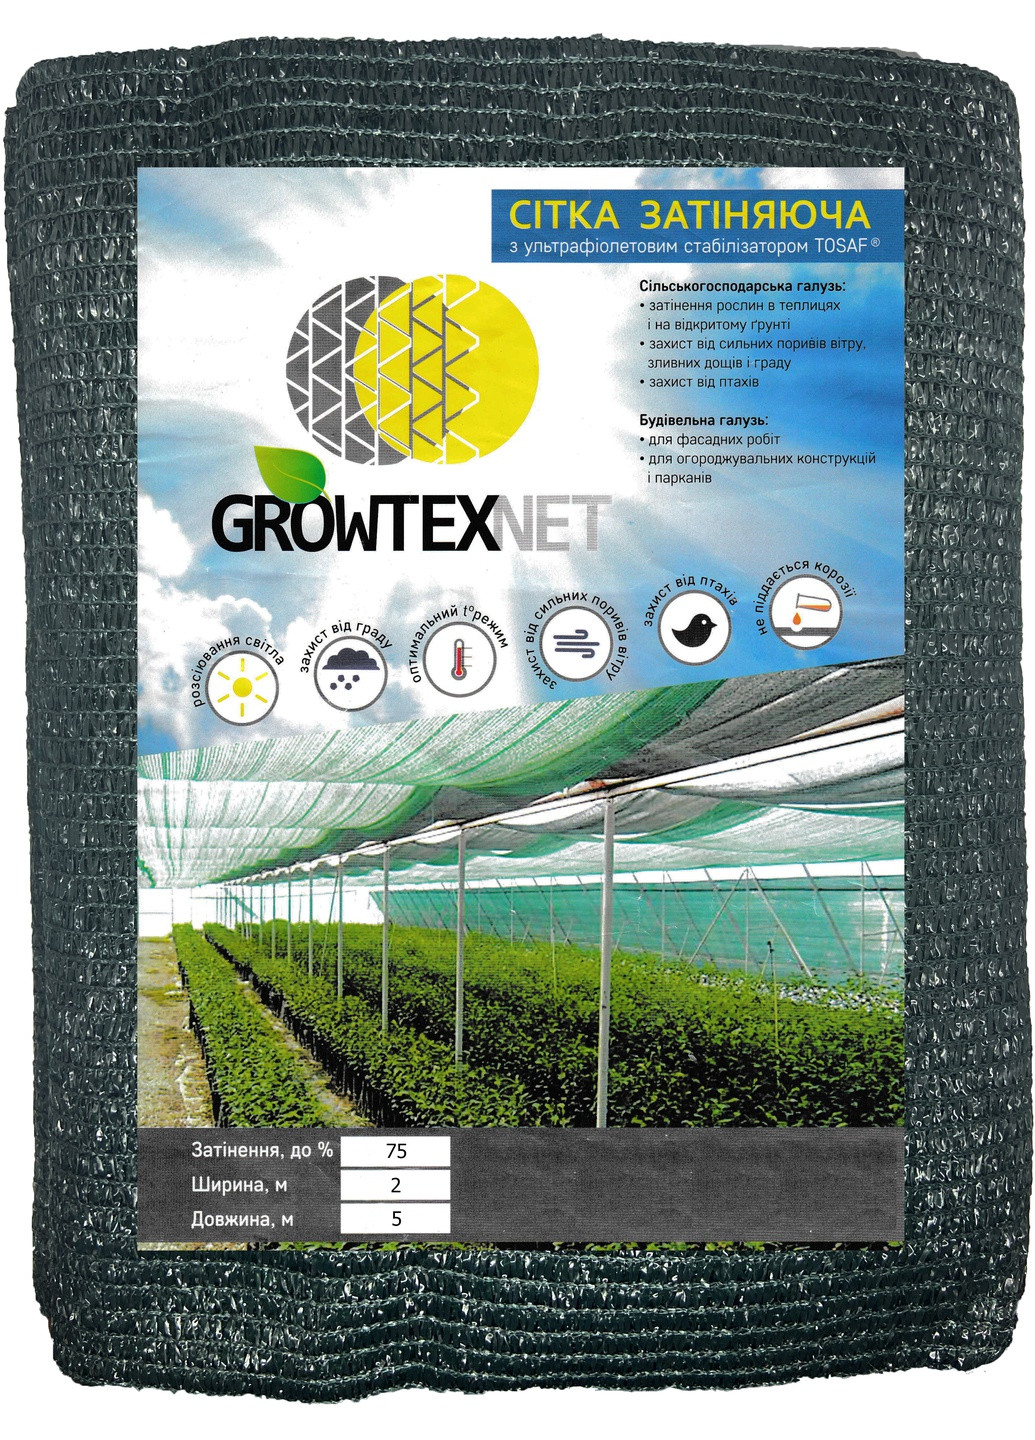 Сетка затеняющая Growtex Net с ультрафиолетовым стабилизатором 70% (60 гр/м2) размер 2х5 м Одетекс (258457572)